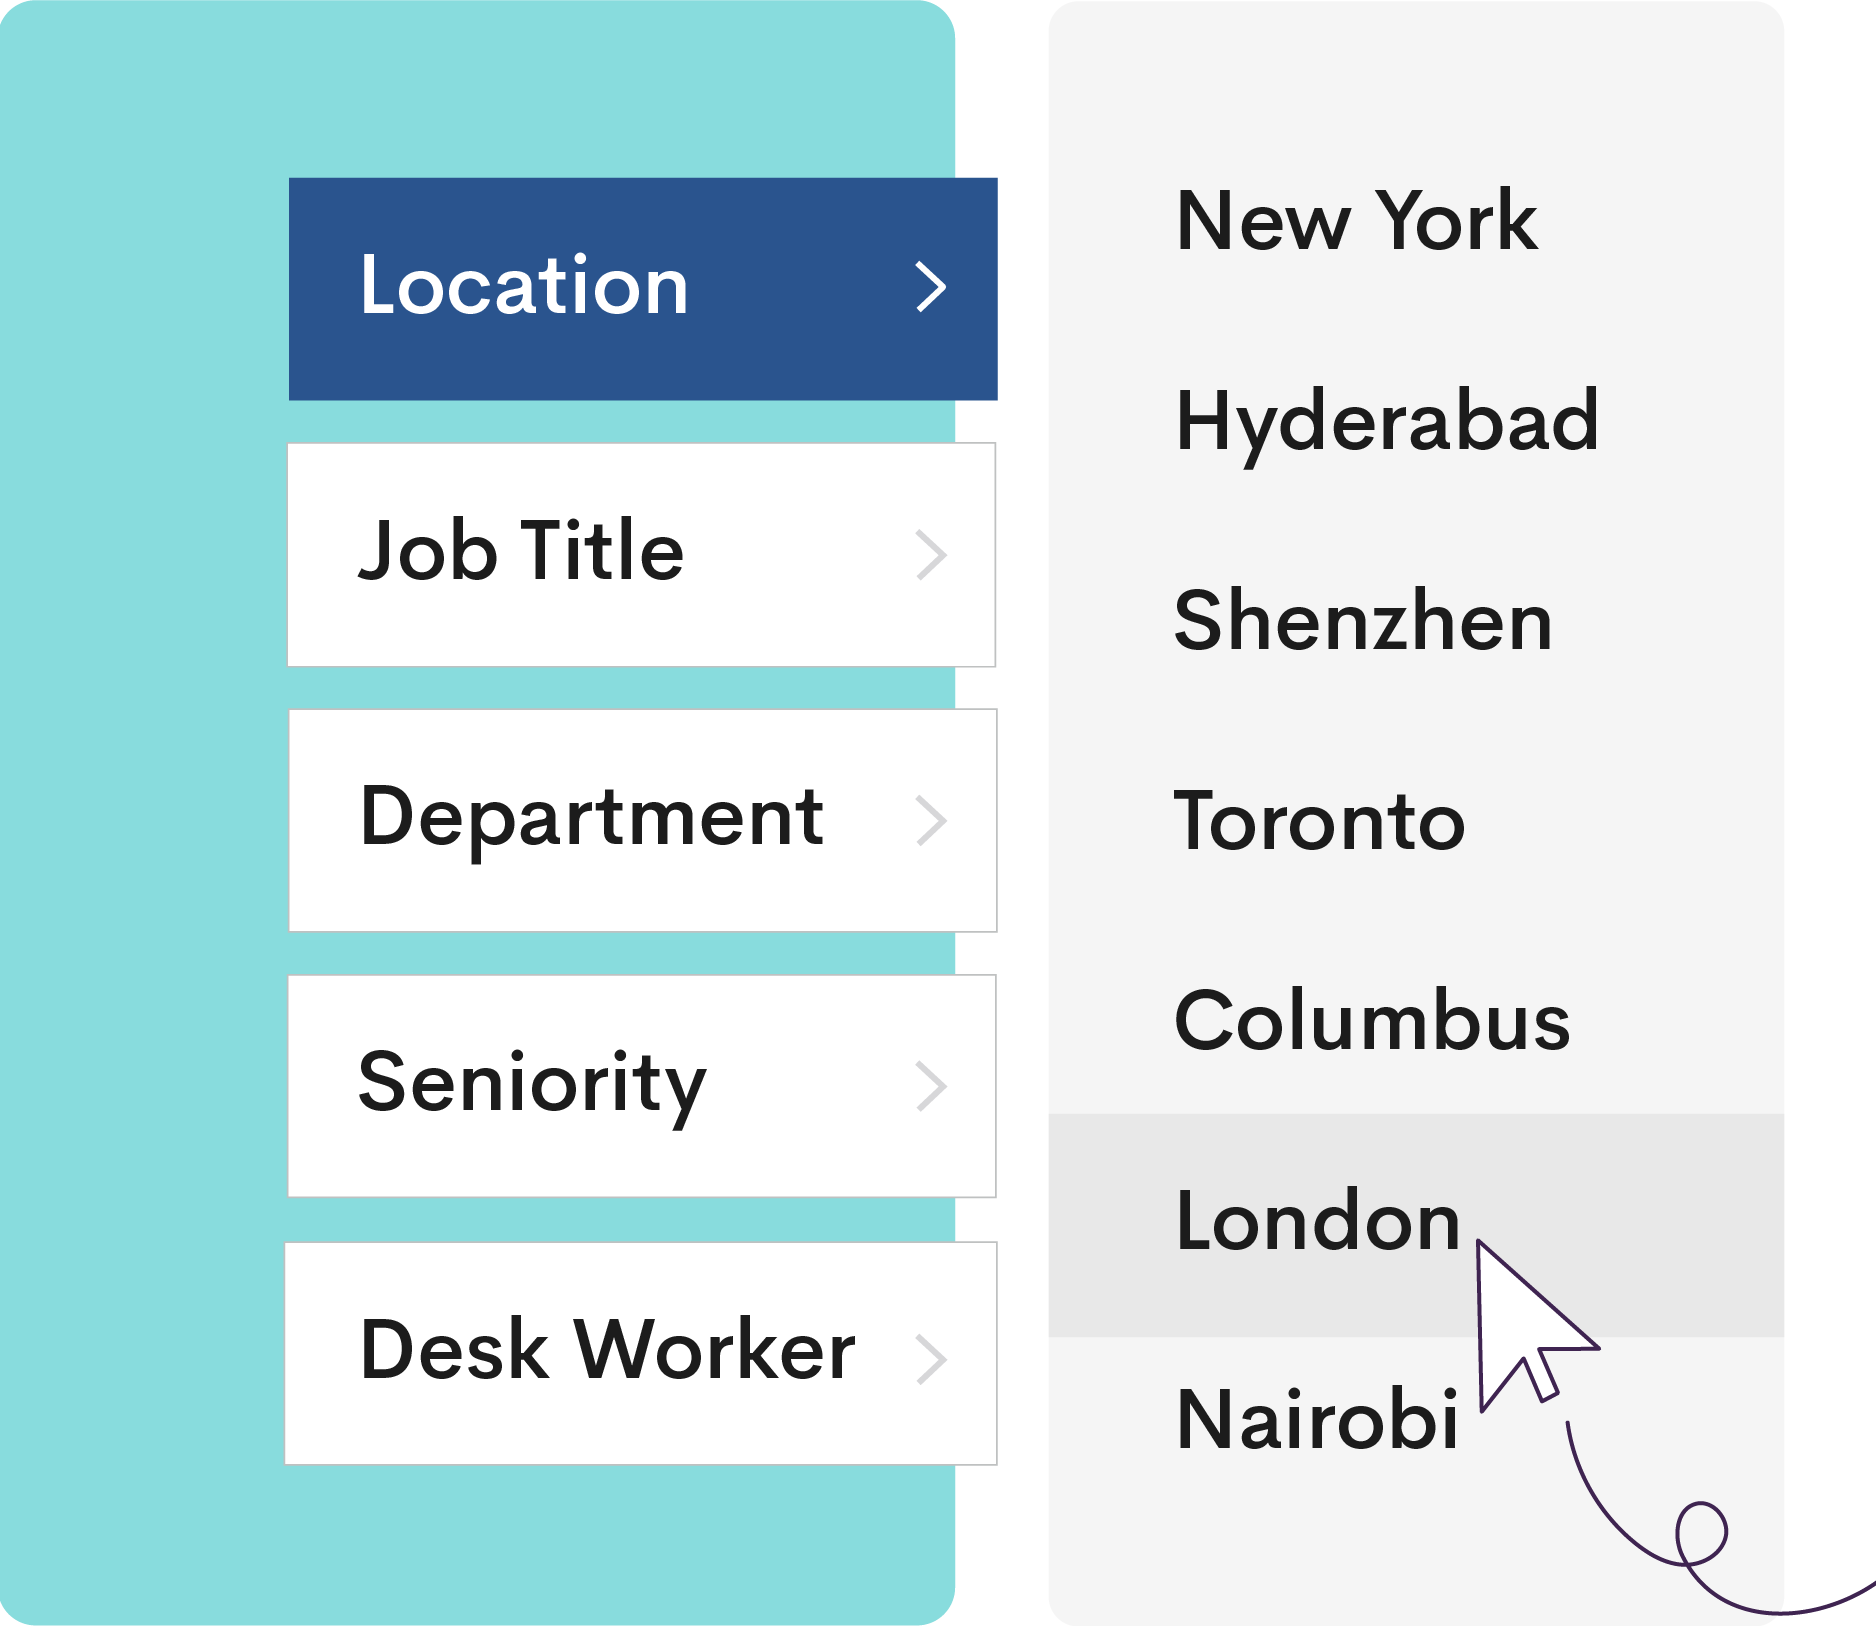 List of job locations, including New York, Hyderabad, Shenzhen, Toronto, Columbus, London, and Nairobi.